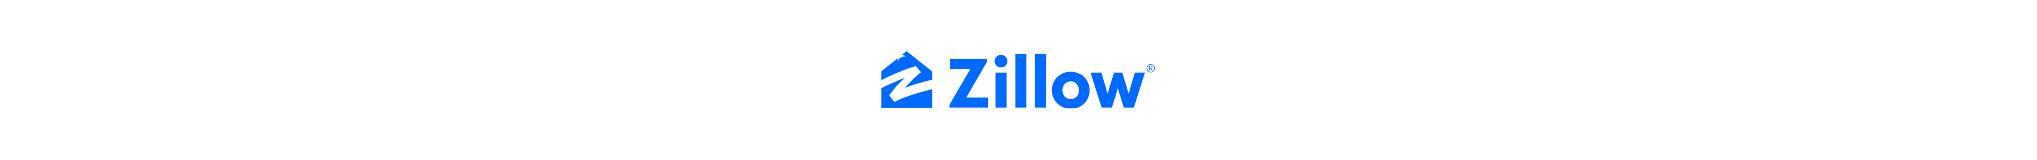 zillow_logo copy 3.png